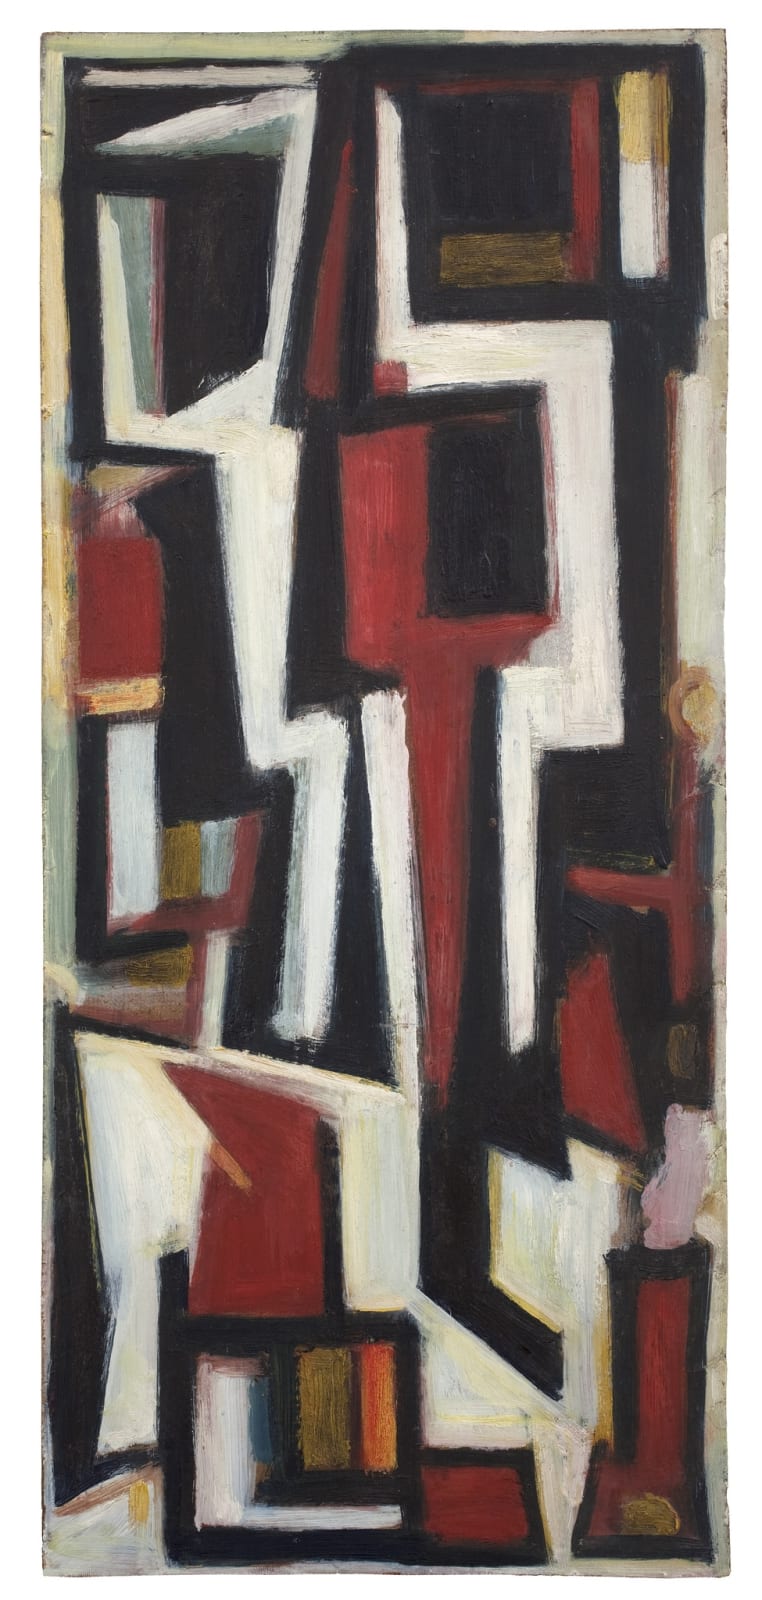 Leo Davy, Seated Figures II, 1952